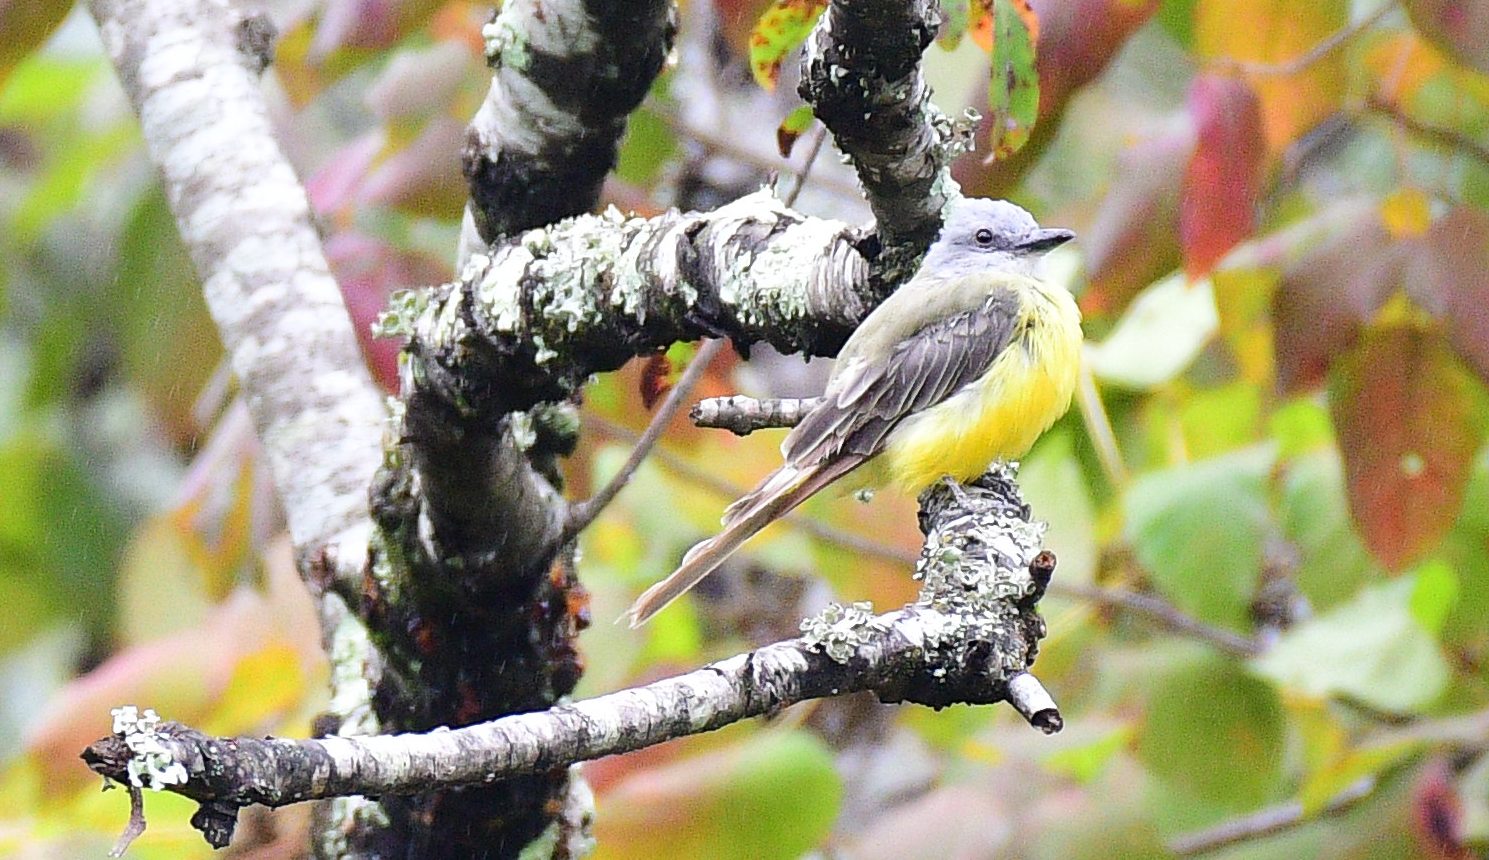 the Kingbird on a branch